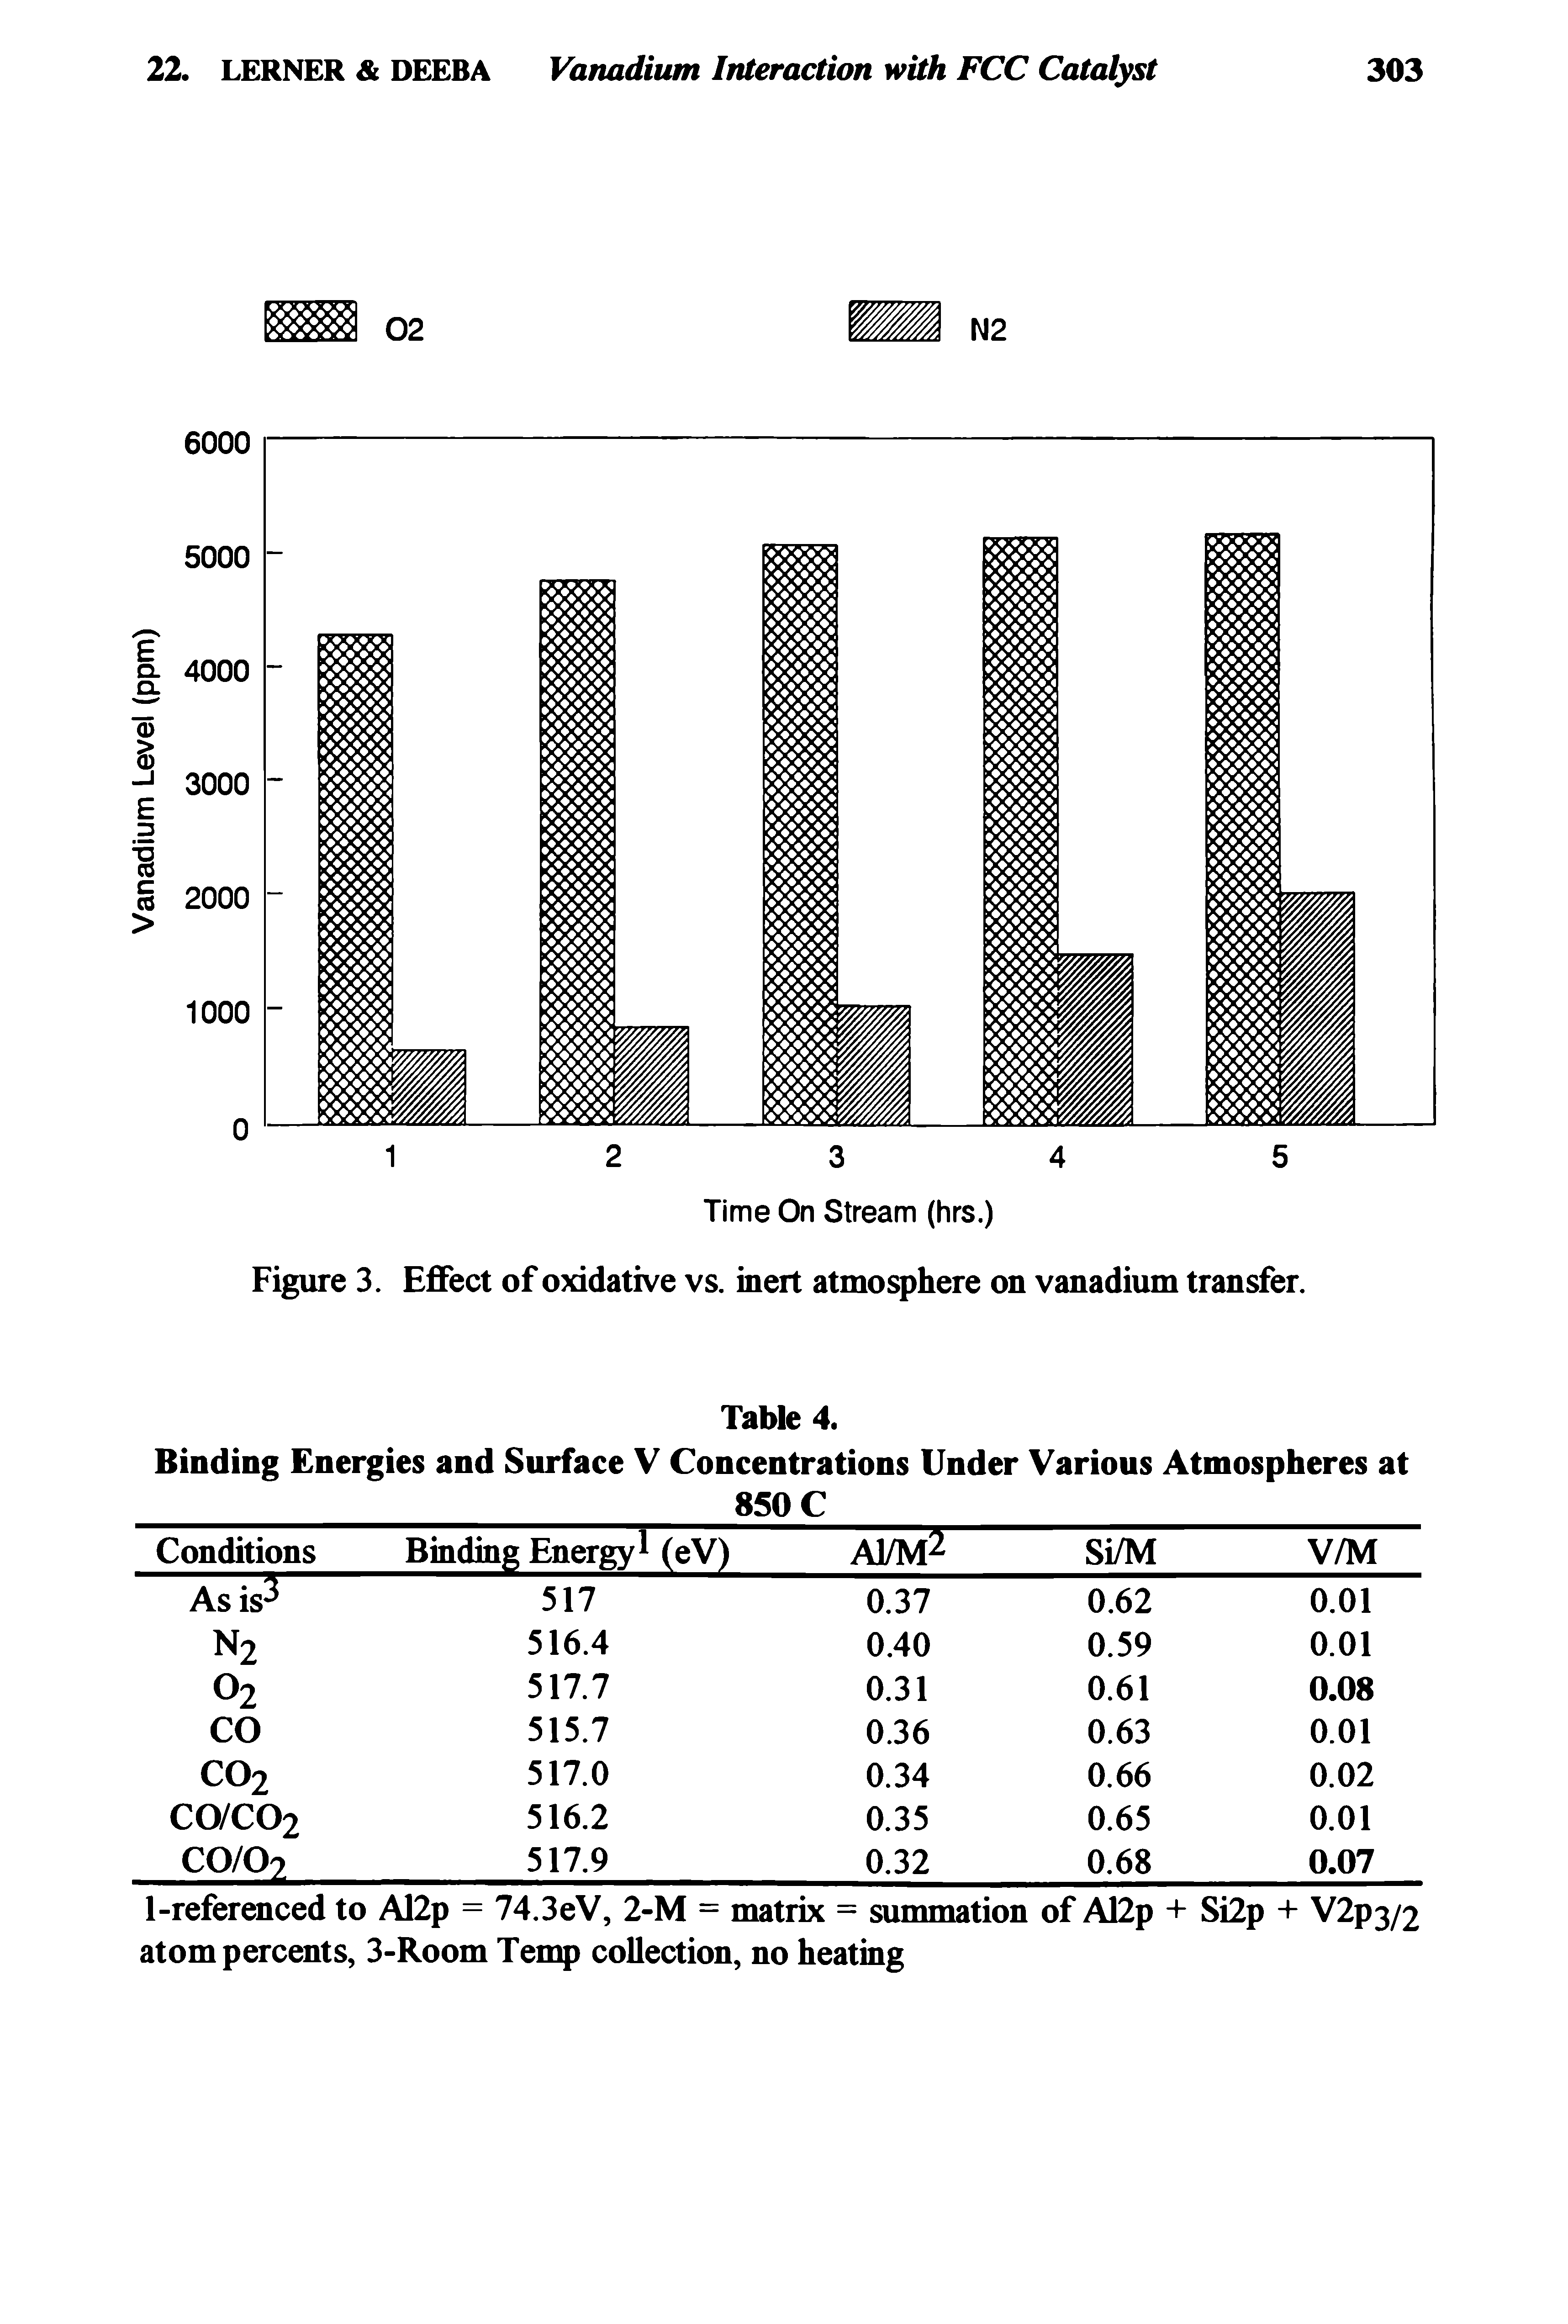 Figure 3. Effect of oxidative vs. inert atmosphere on vanadium transfer.